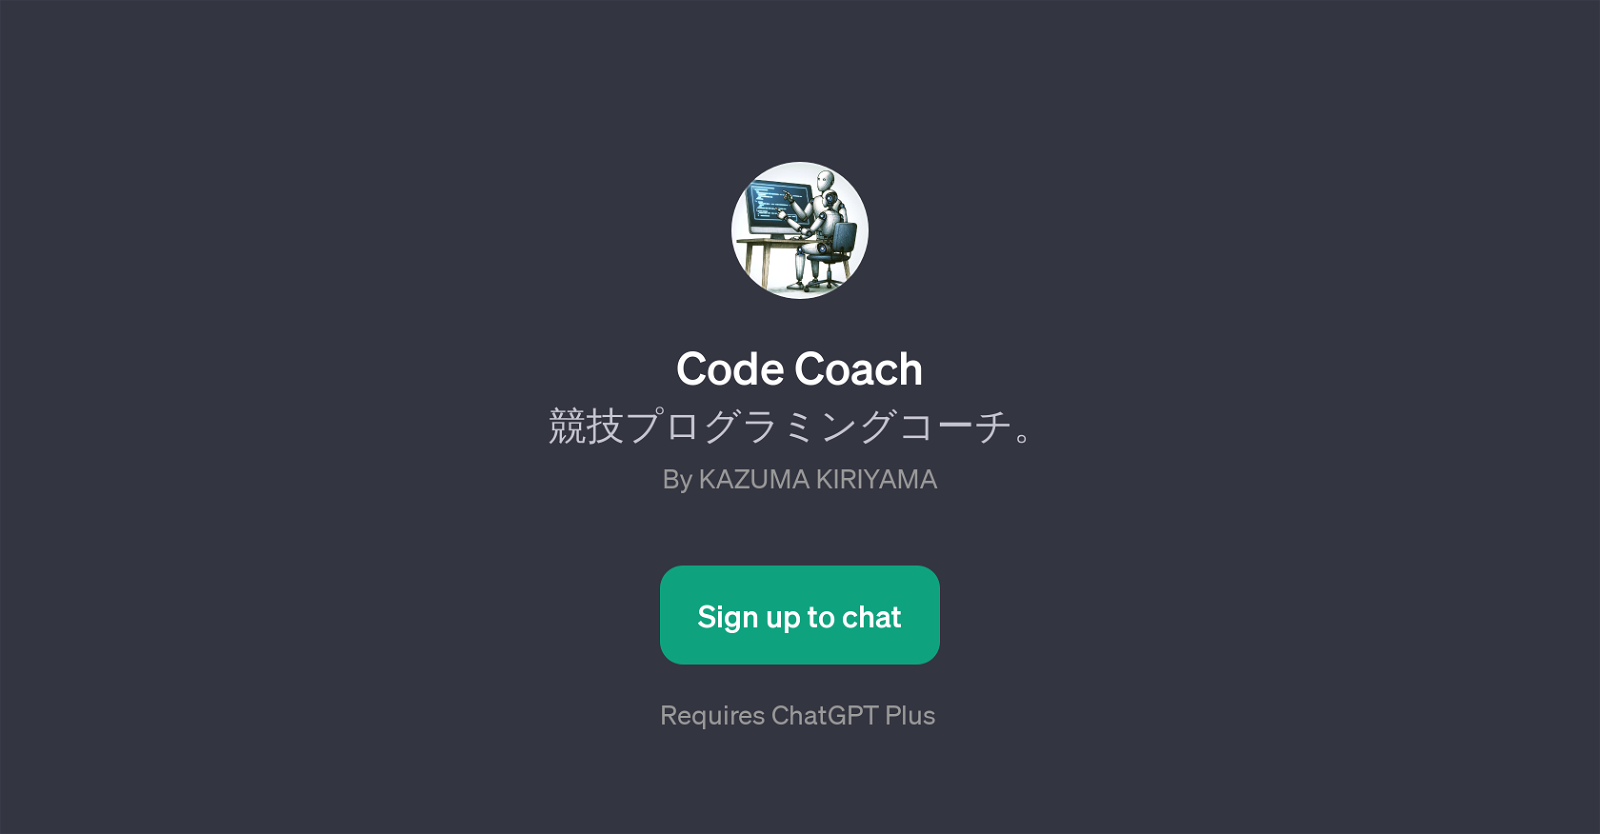 Code Coach website